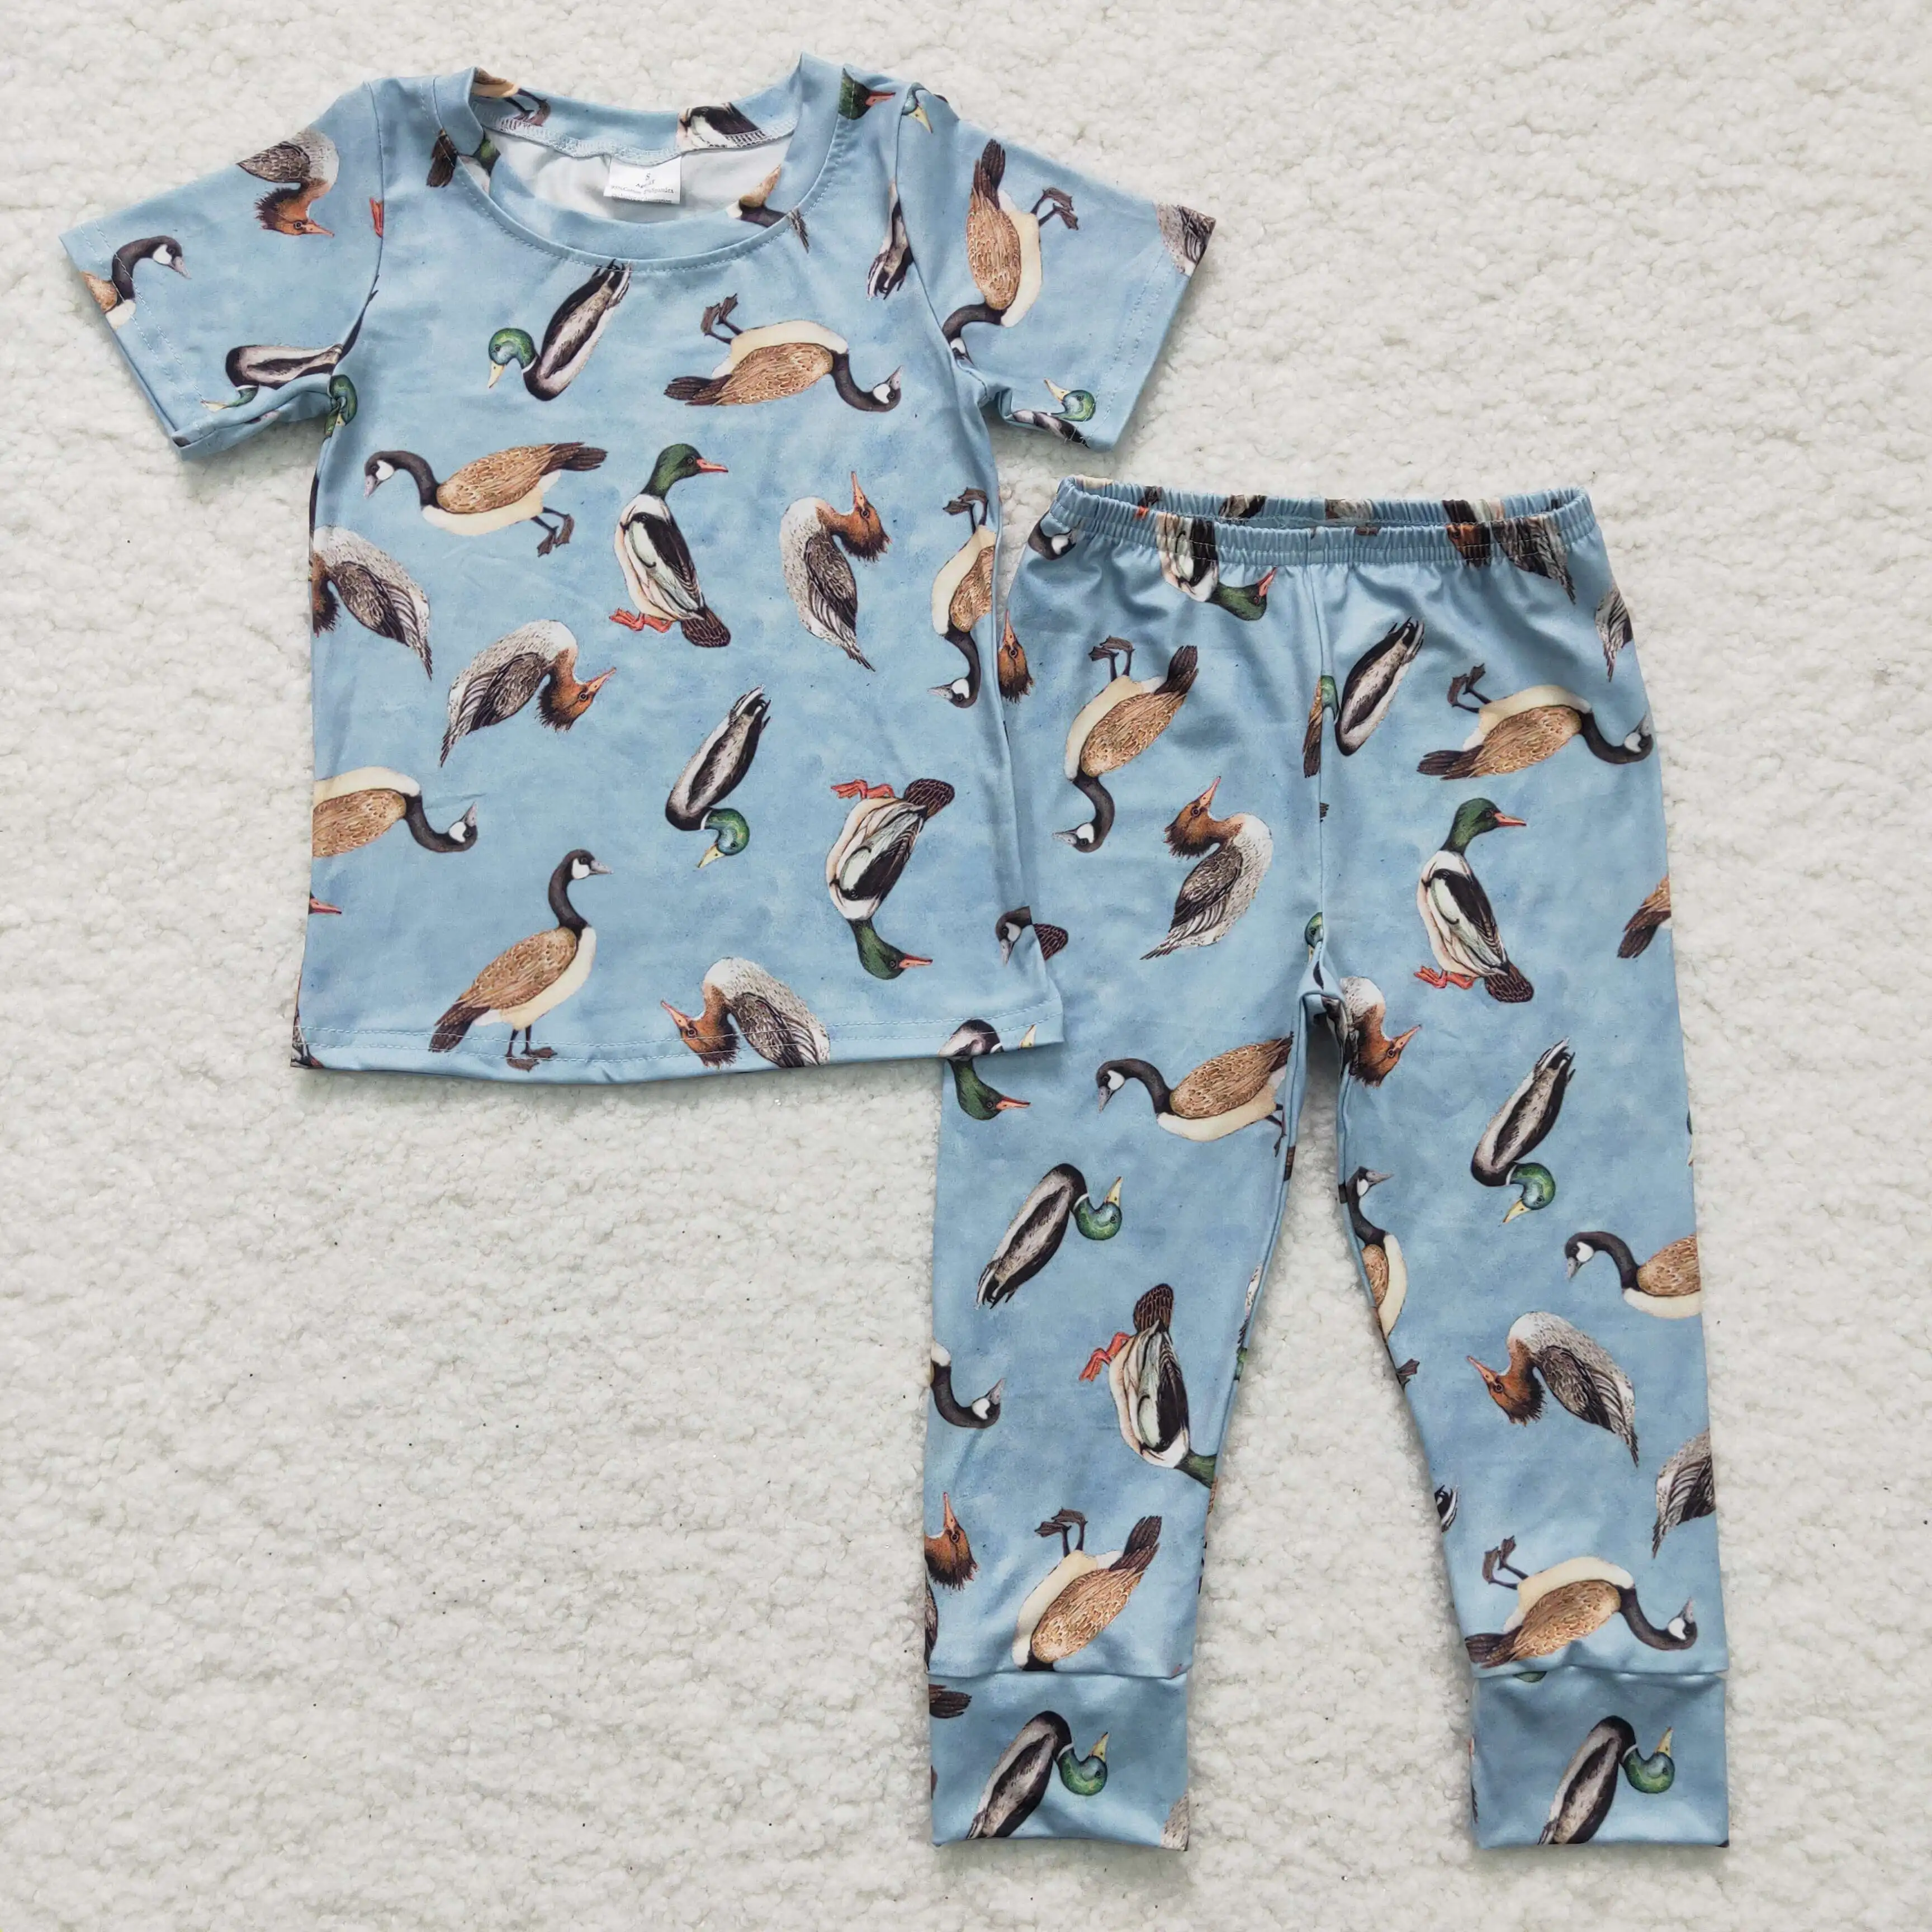 high quality Mallard duck boys pajamas cheap china wholesale kids clothing toddler boys clothing sets